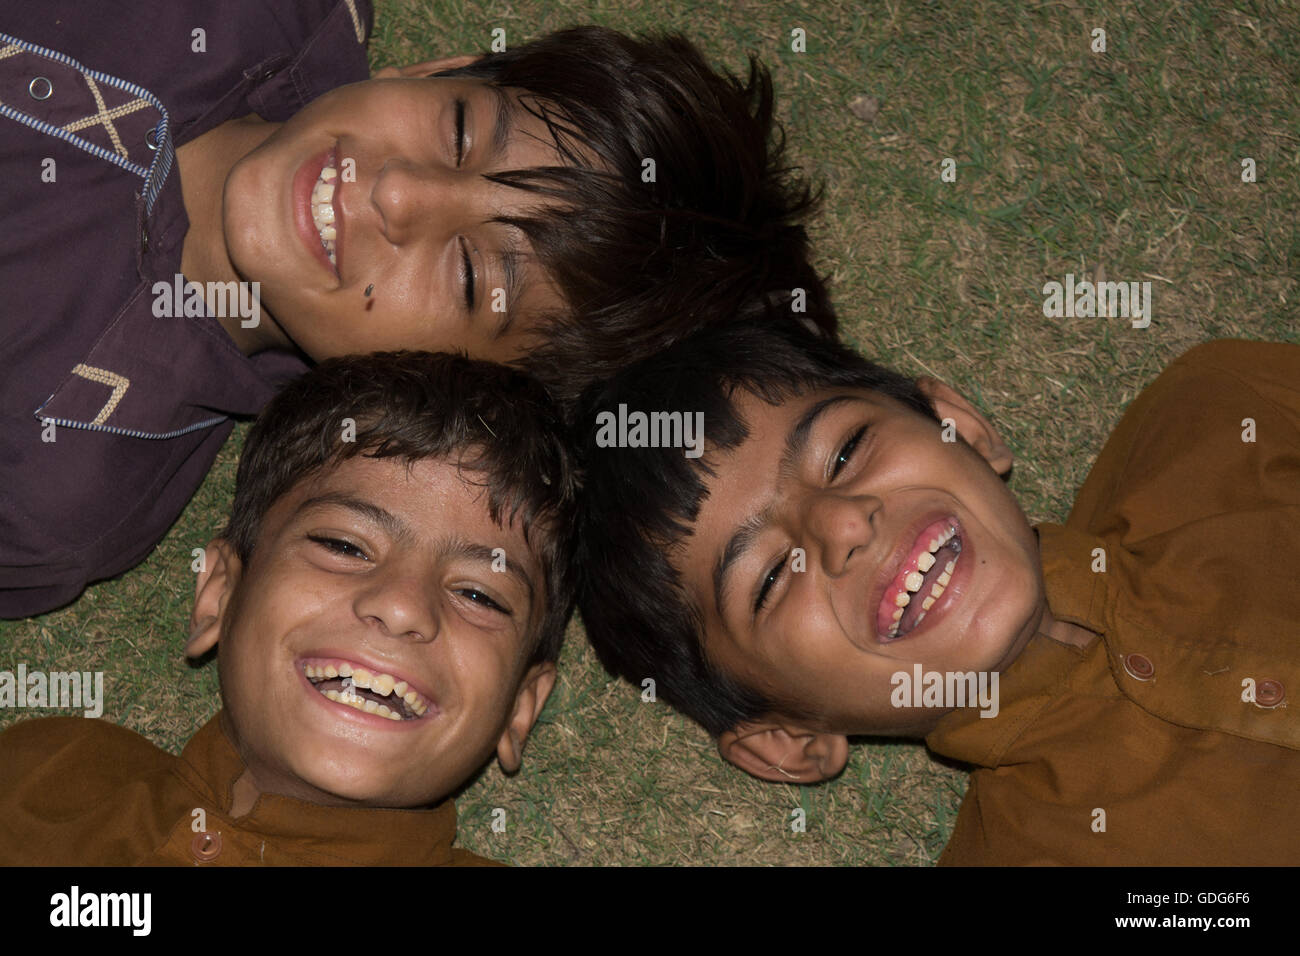 three kids are enjoying and pass smiles Stock Photo